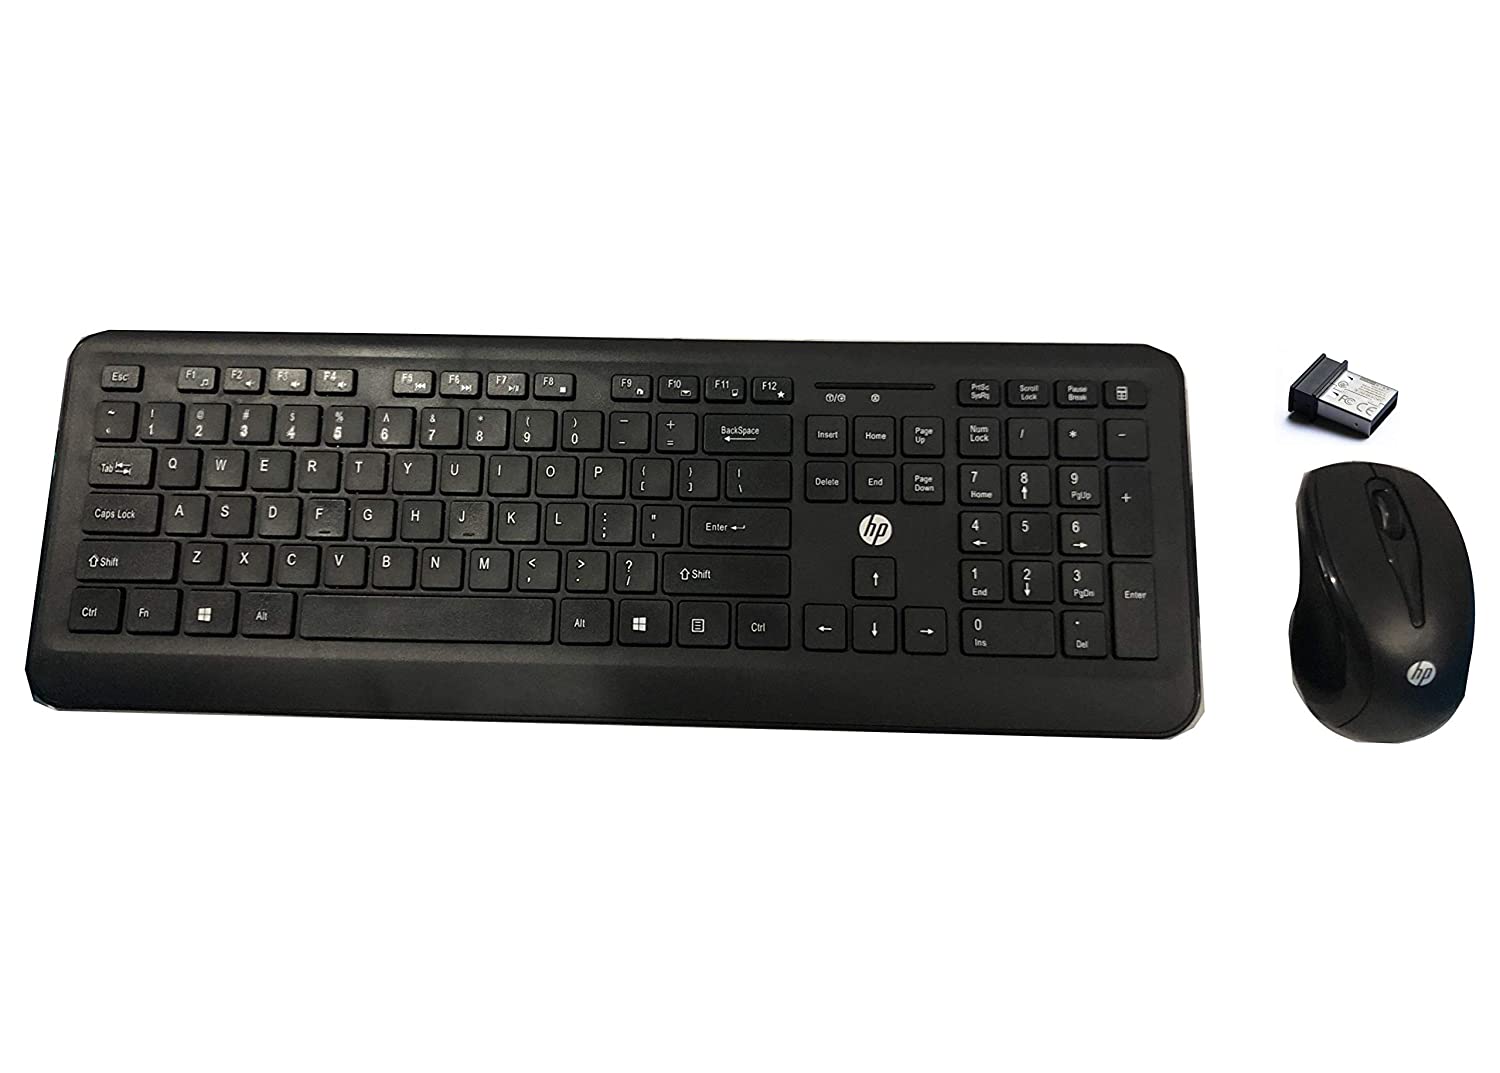 HP 3RQ75PA Keyboard & Mouse Combo Wireless Multi-device Keyboard (Black)